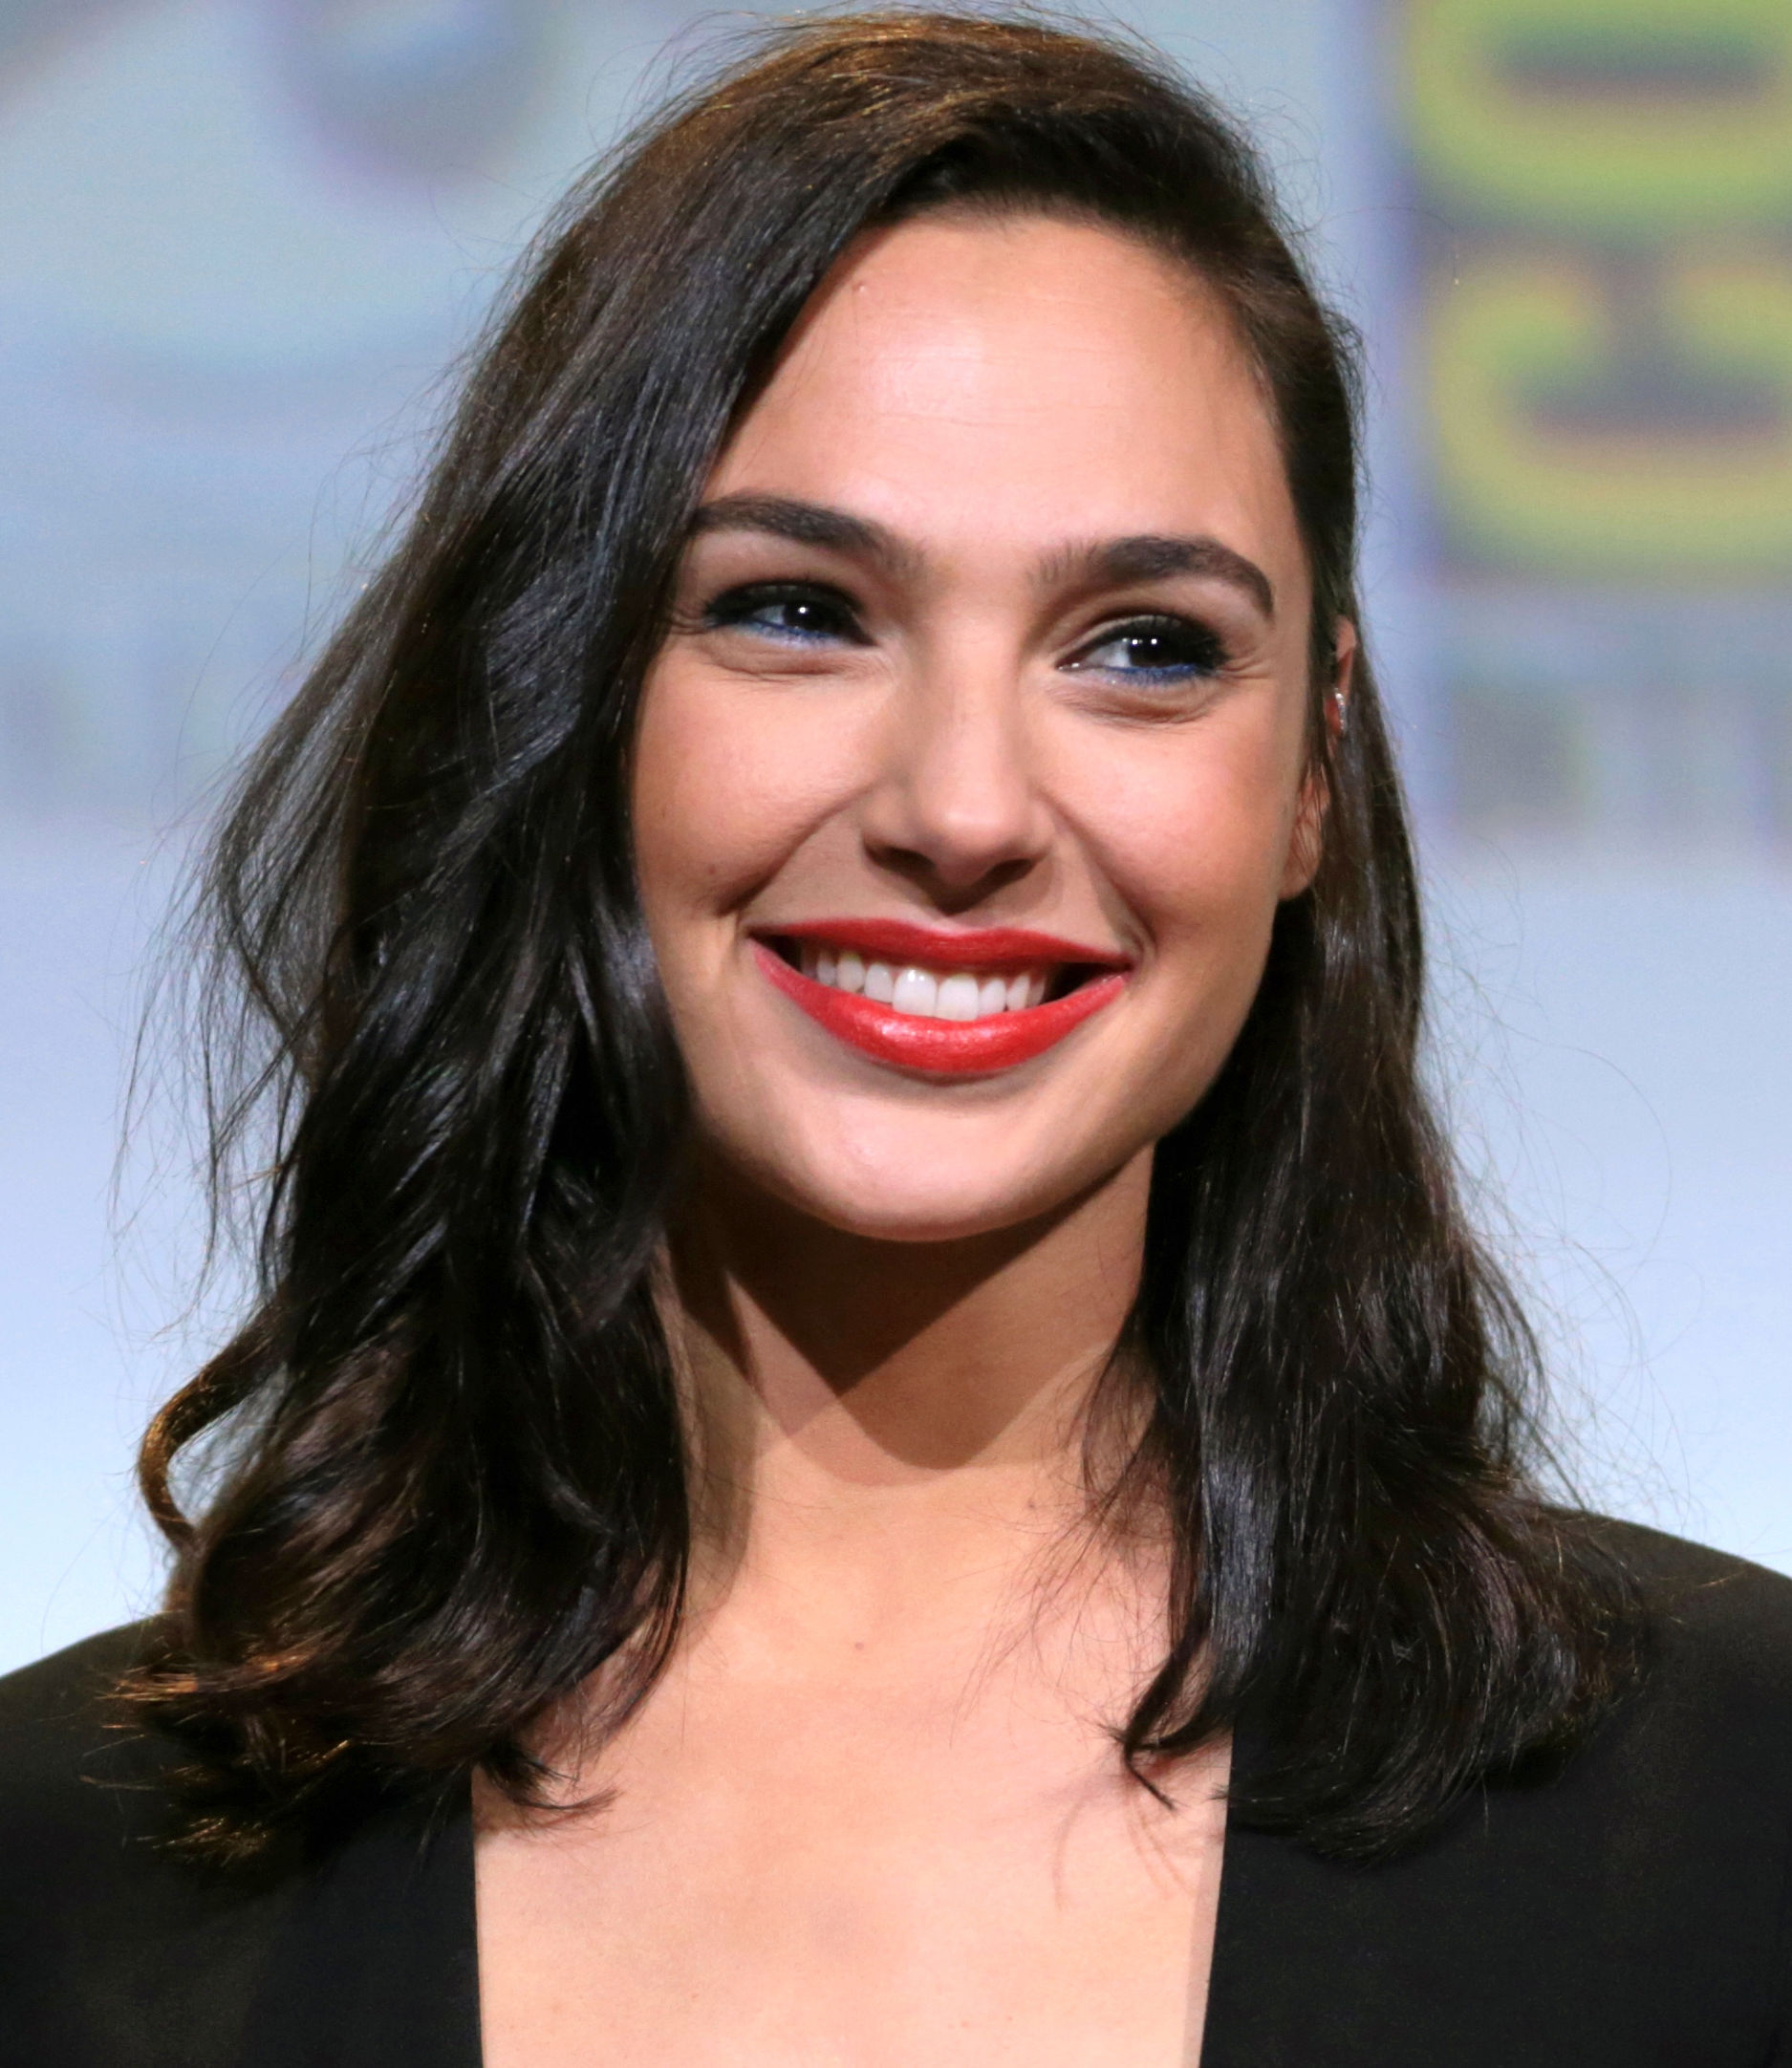 Fast & Furious' Actress Gal Gadot Cast as Wonder Woman in 'Batman